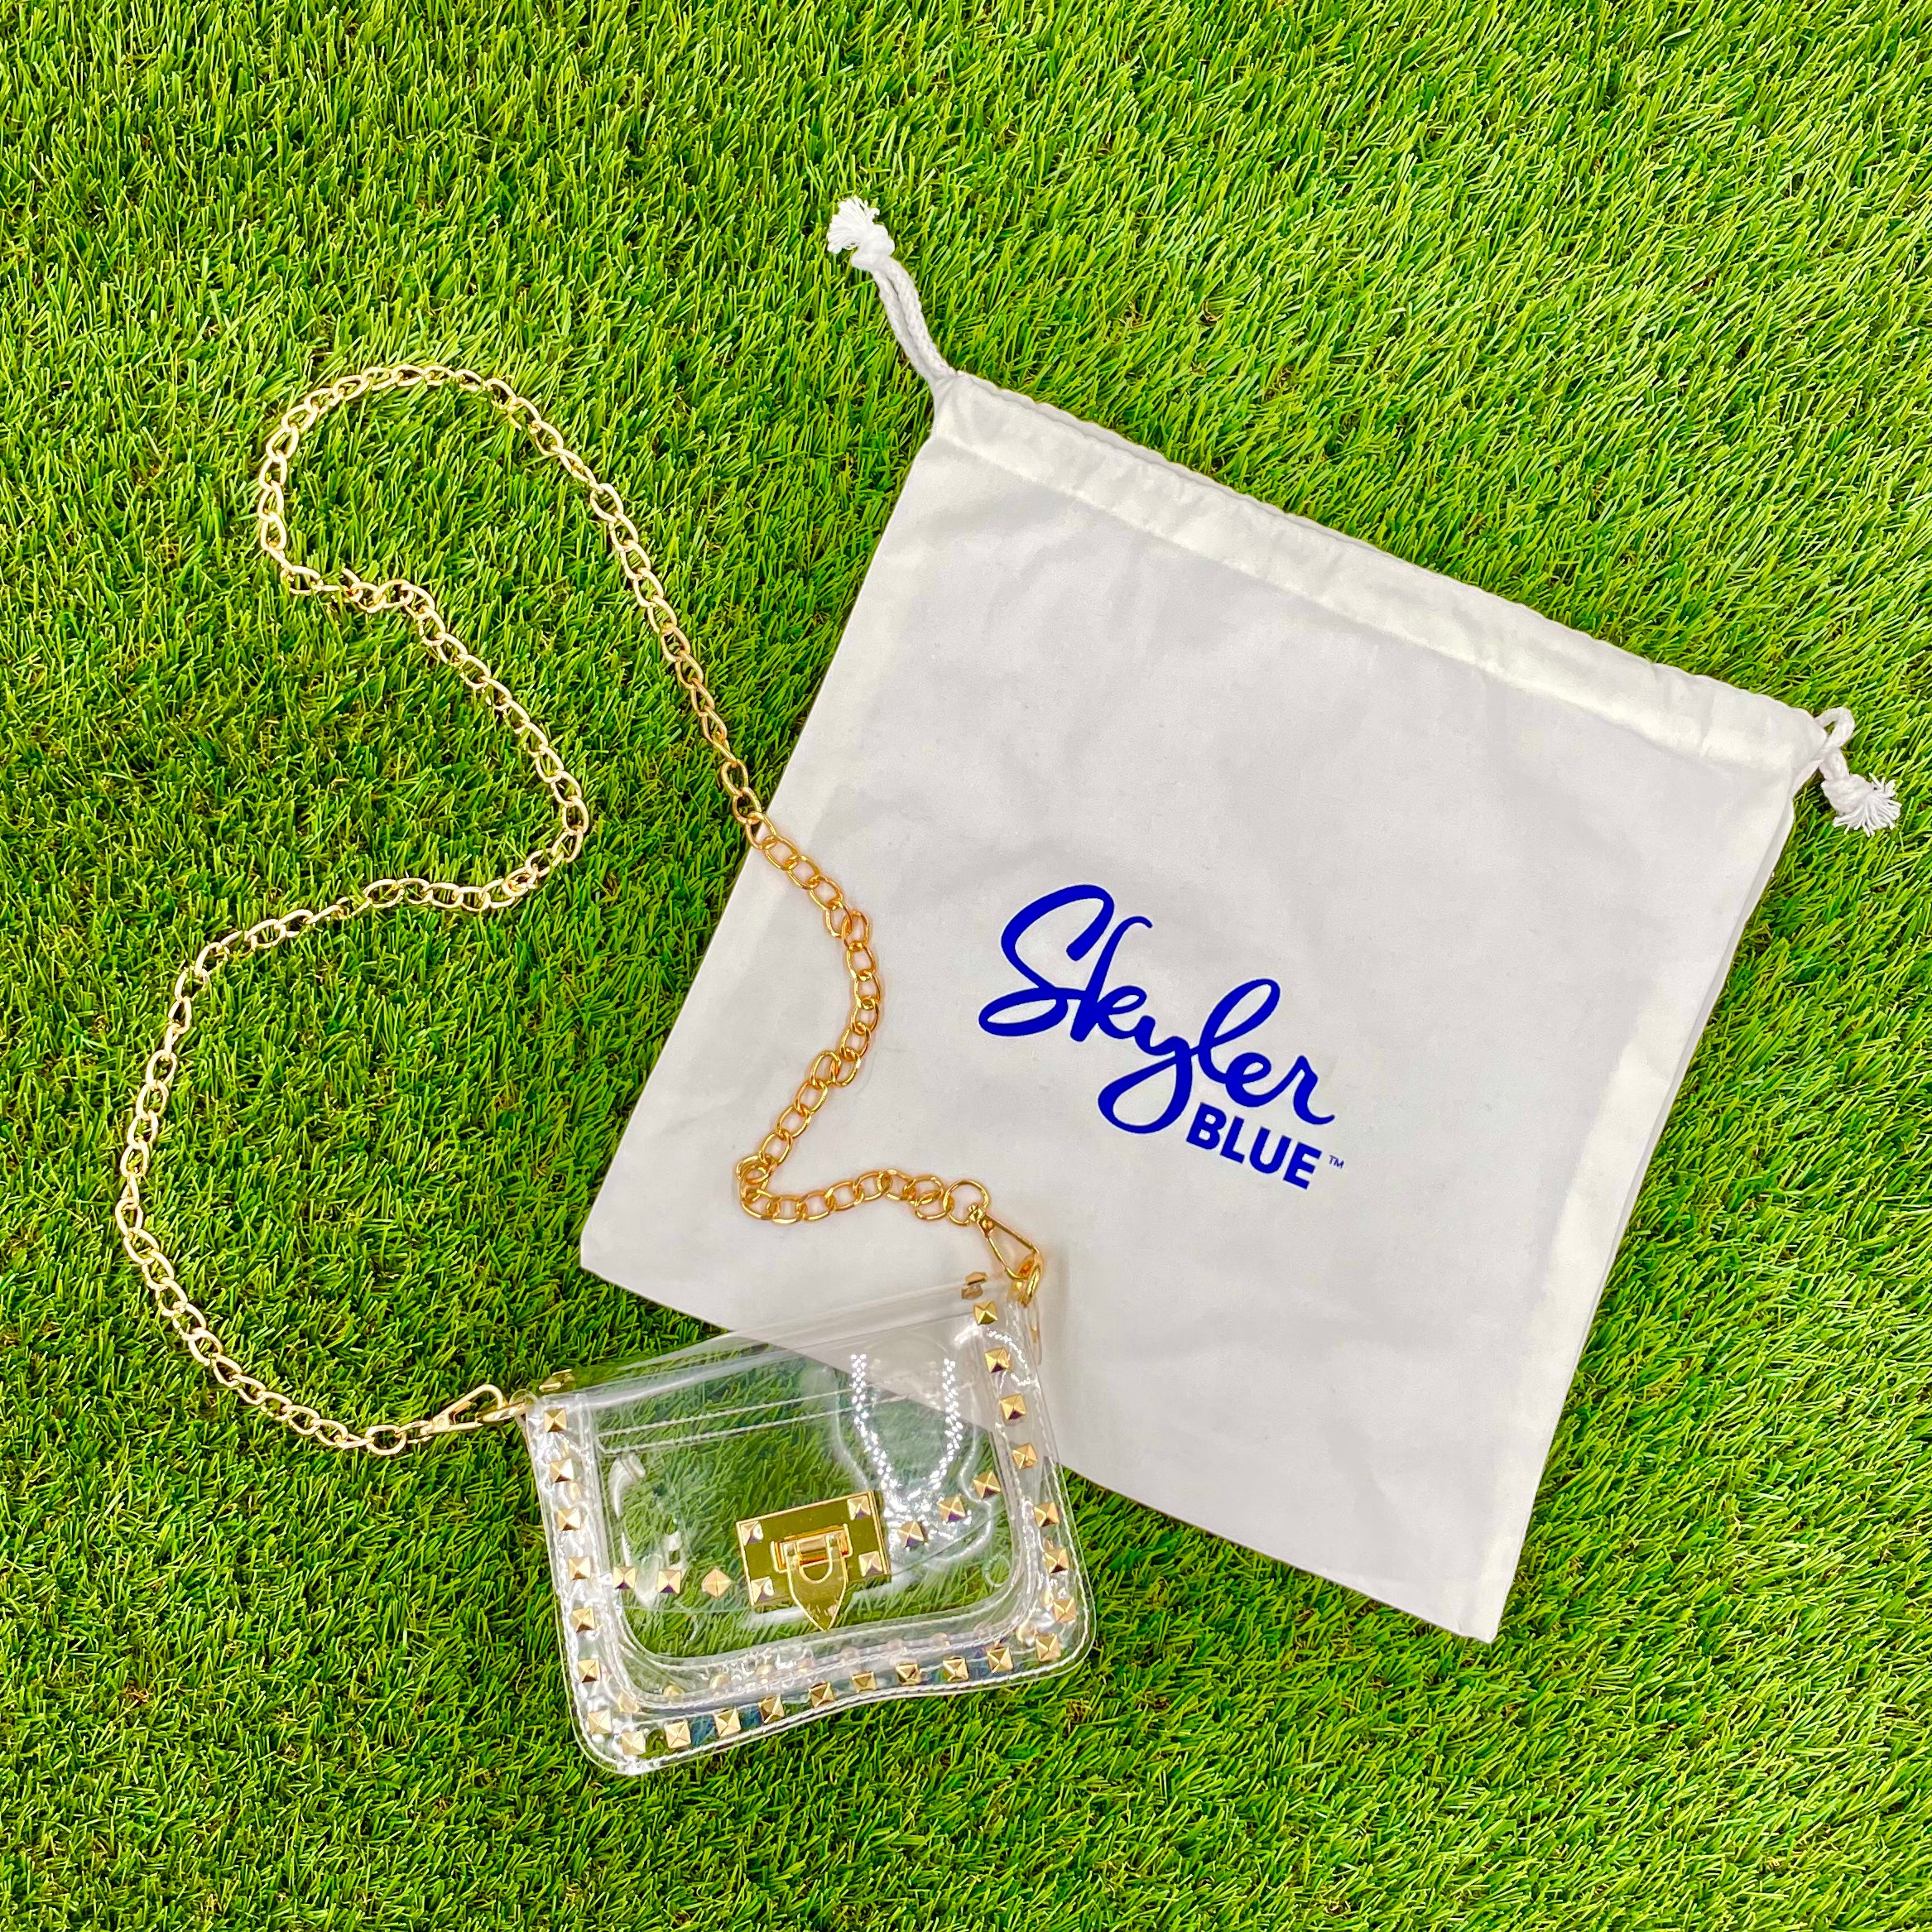 Skyler Blue’s Small Studded Clear Bag stadium approved clear bag / clear purse.